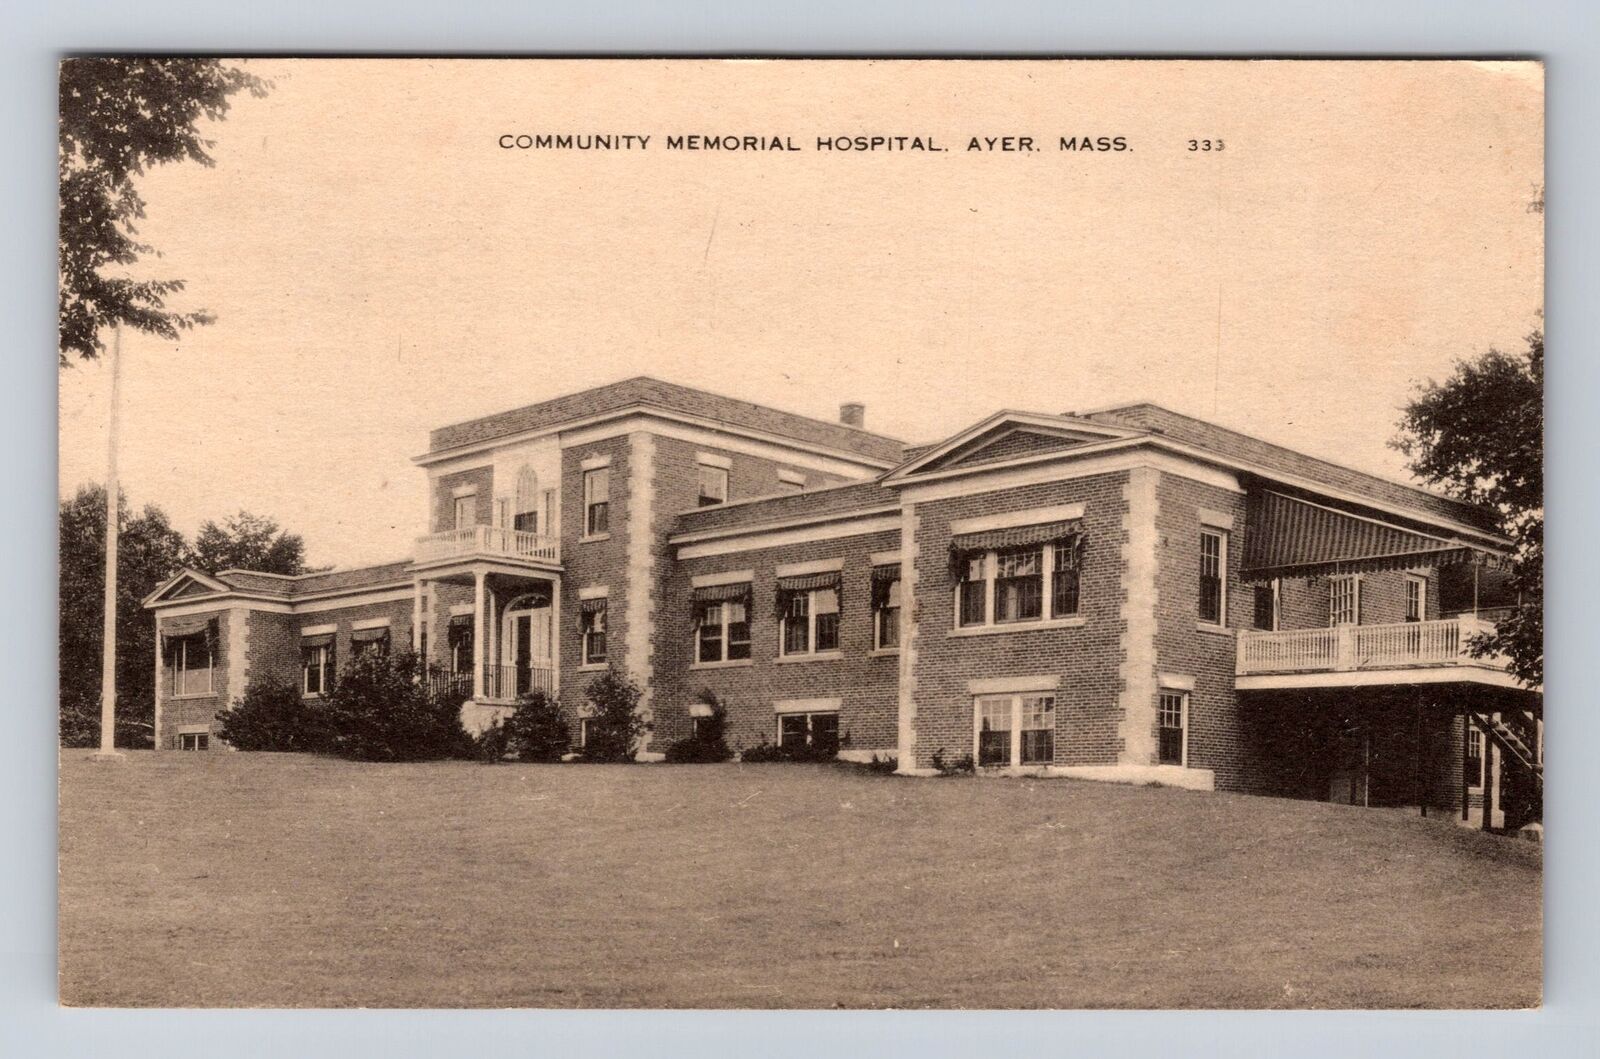 Ayer MA-Massachusetts, Community Memorial Hospital, Vintage Souvenir Postcard